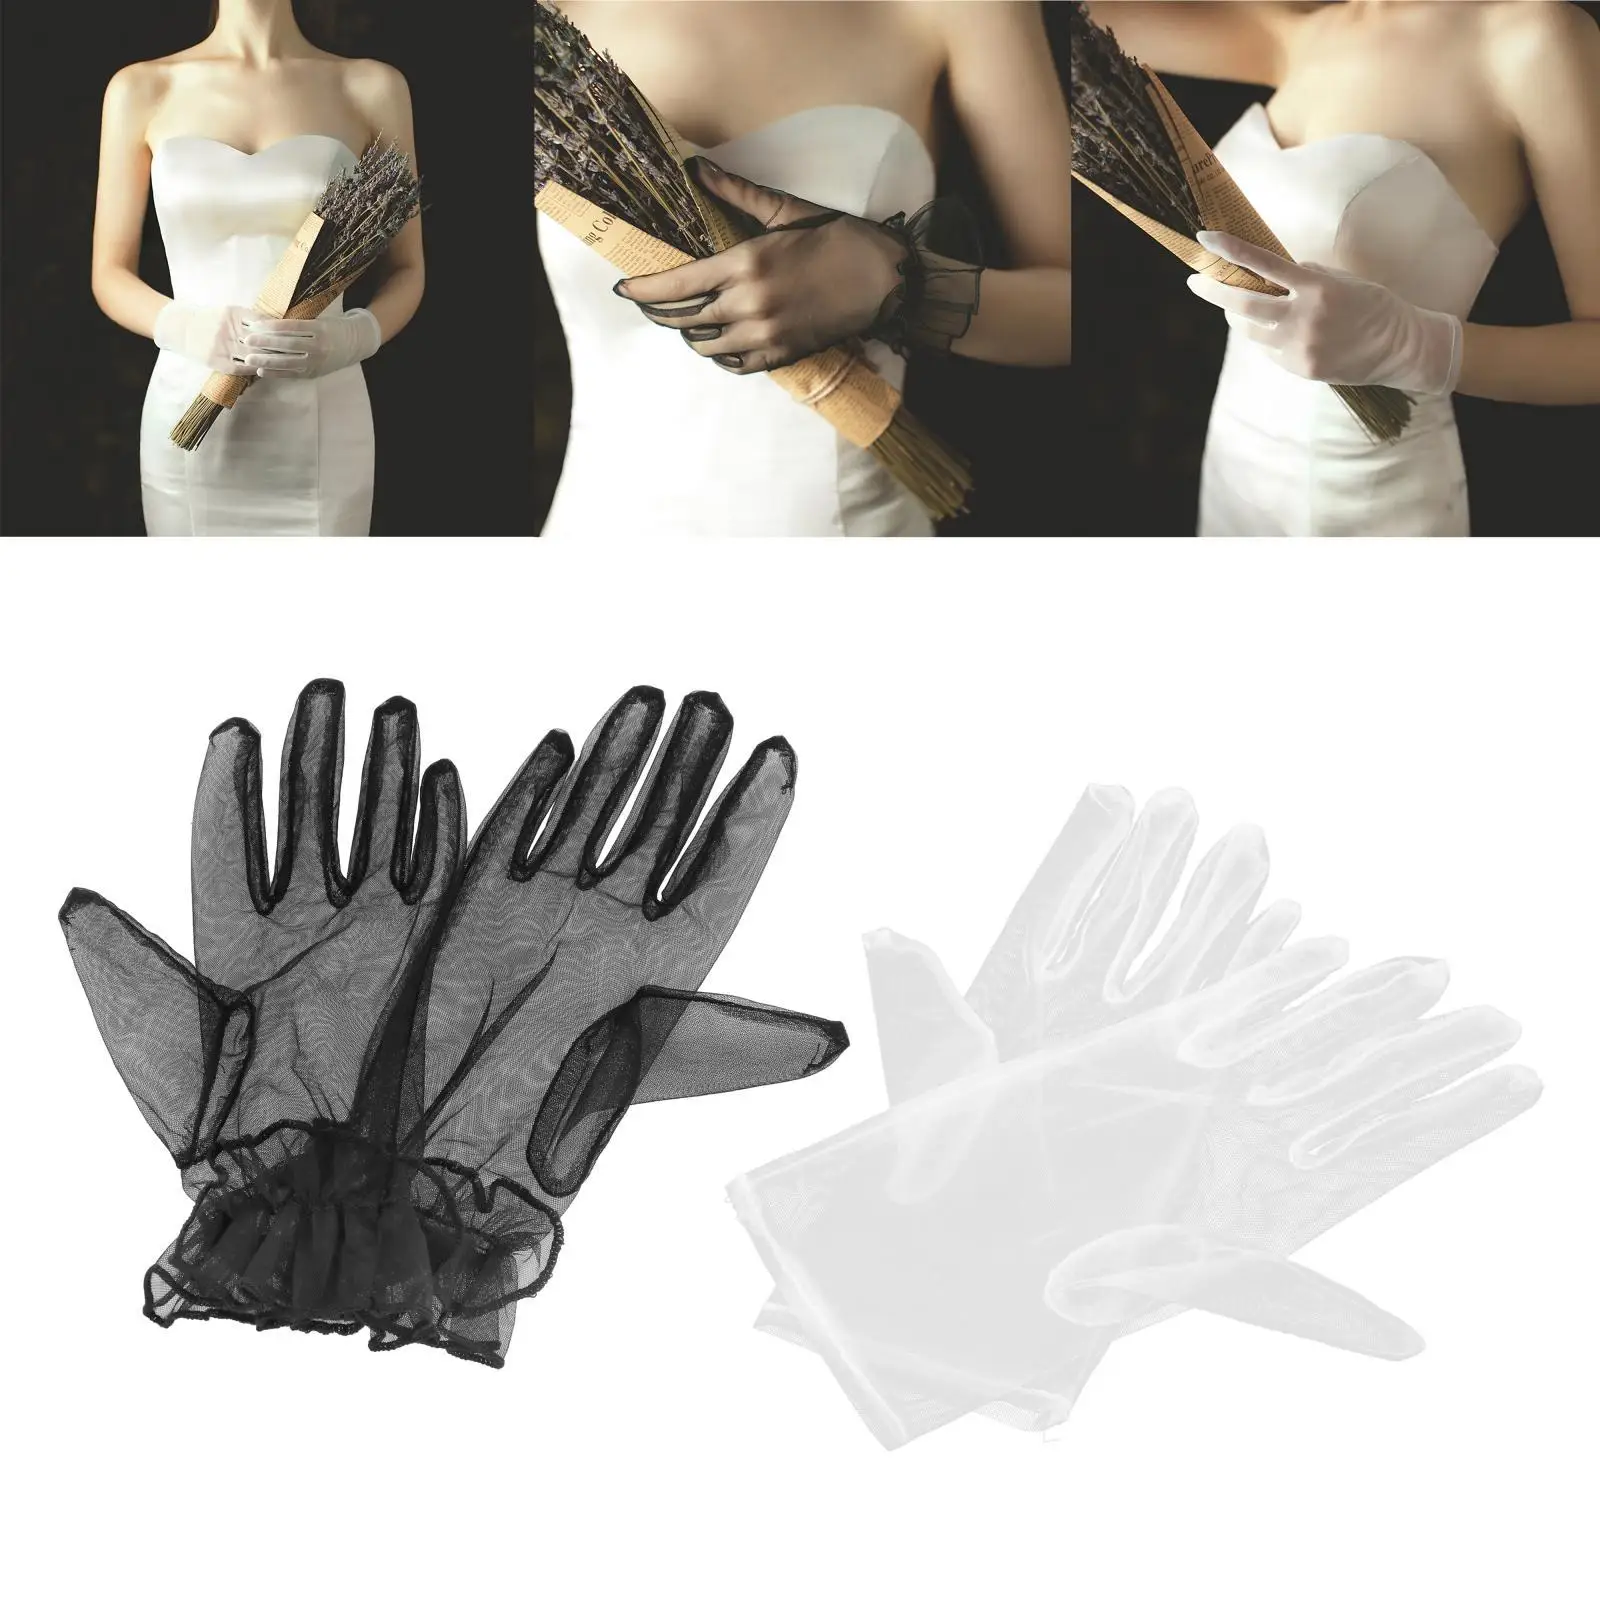 Fashion Bridal Gloves Lady Wrist Length Thin Full Finger Mittens Bride Wedding